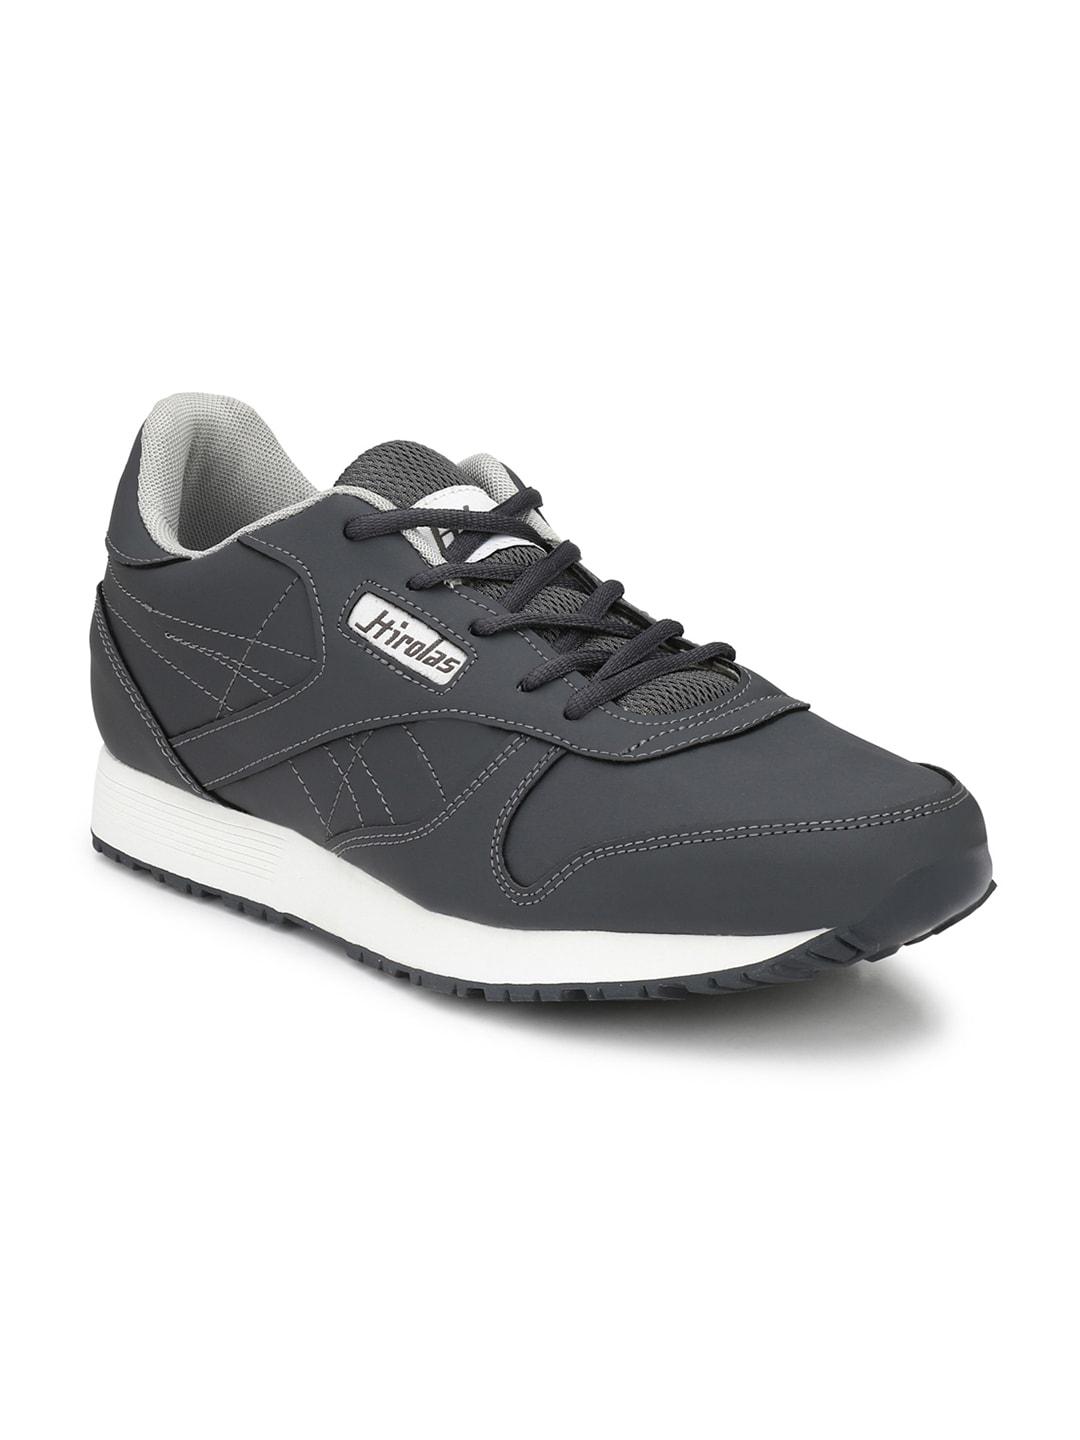 hirolas-men-grey-running-shoes